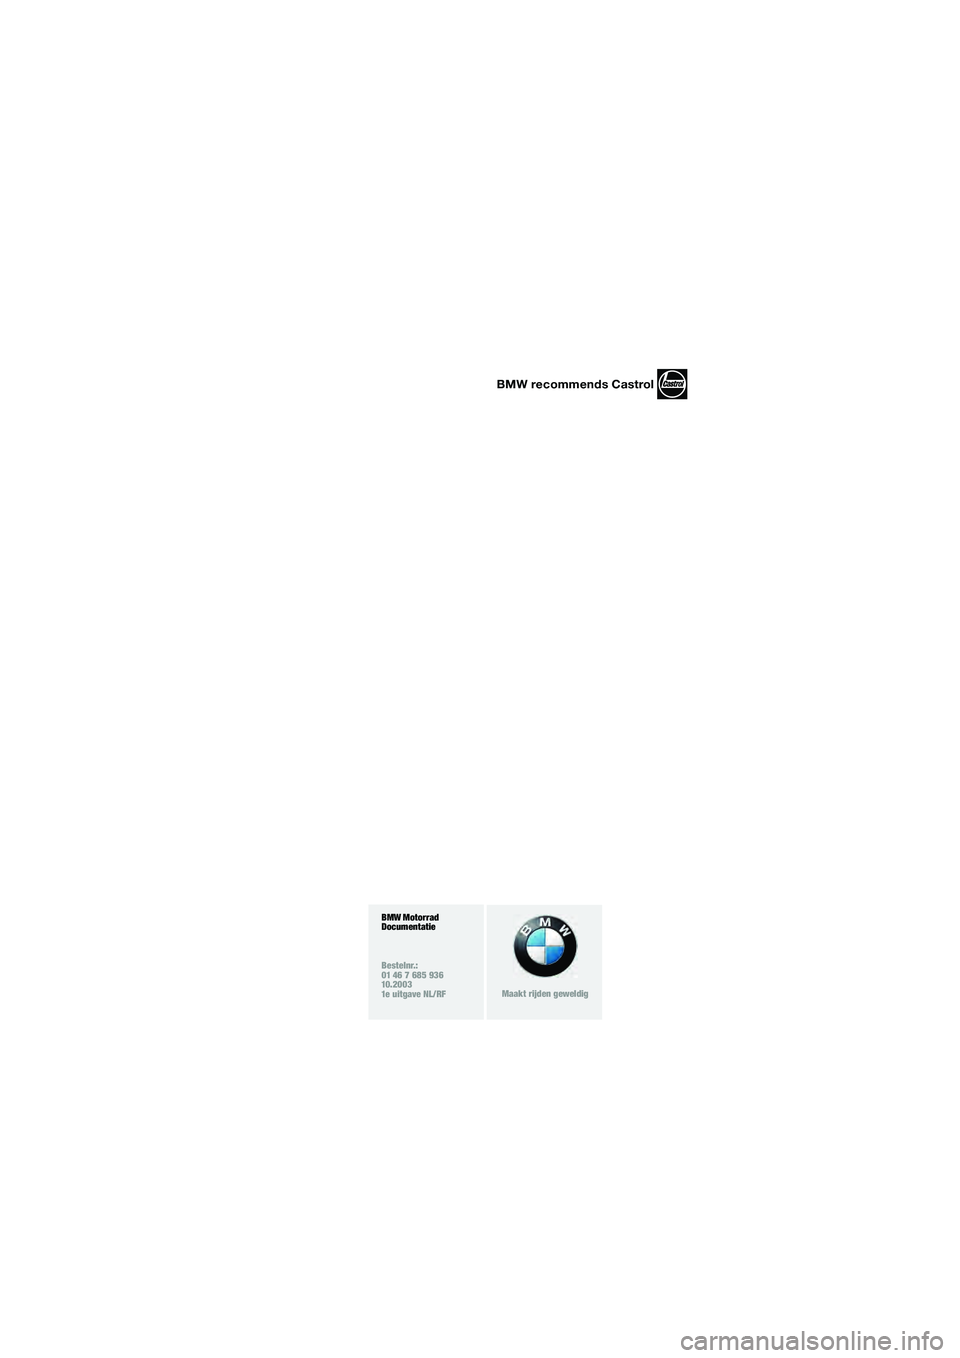 BMW MOTORRAD F 650 GS DAKAR 2003  Handleiding (in Dutch) 1
BMW recommends Castrol
BMW Motorrad
Documentatie 
Bestelnr.:
01 46 7 685 936
10.2003
1e uitgave NL/RF
Maakt rijden geweldig
10R13bkn4.book  Seite 3  Montag, 22. September 2003  3:54 15 